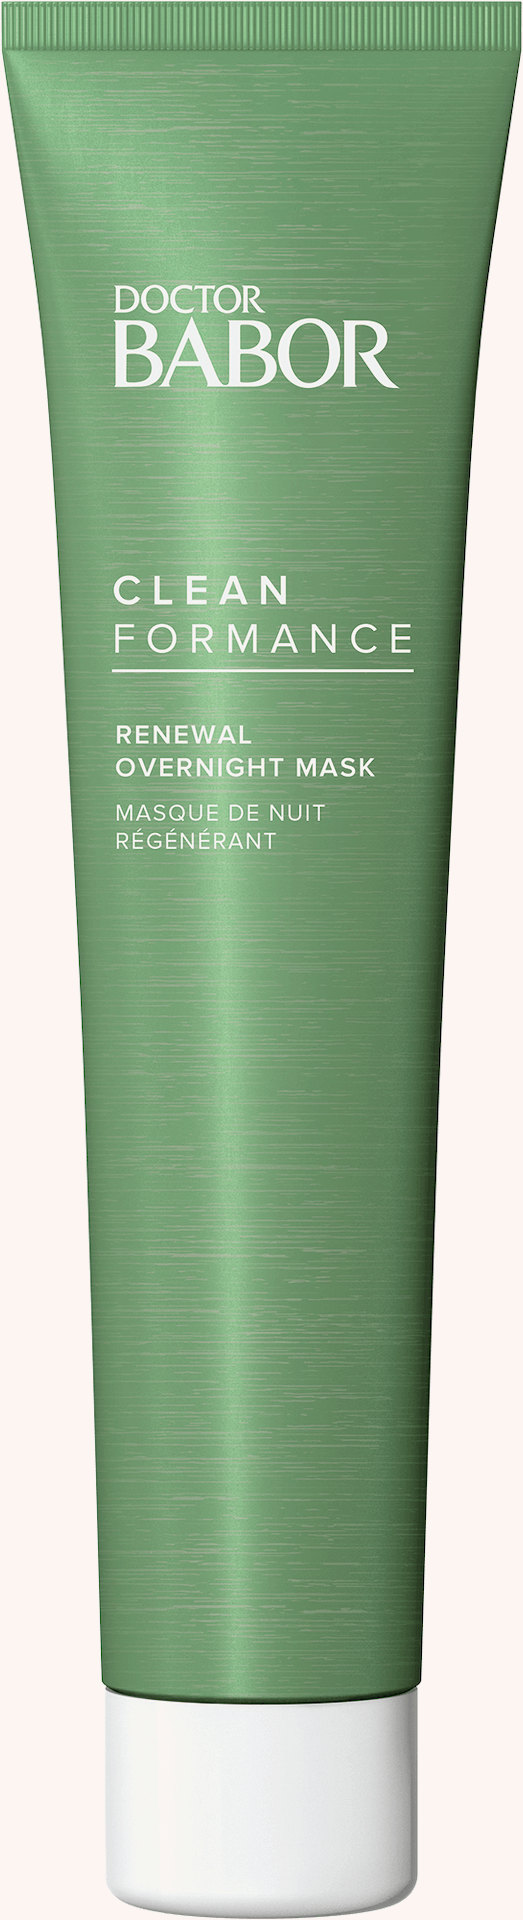 Cleanformance Renewal Overnight Mask 75 ml